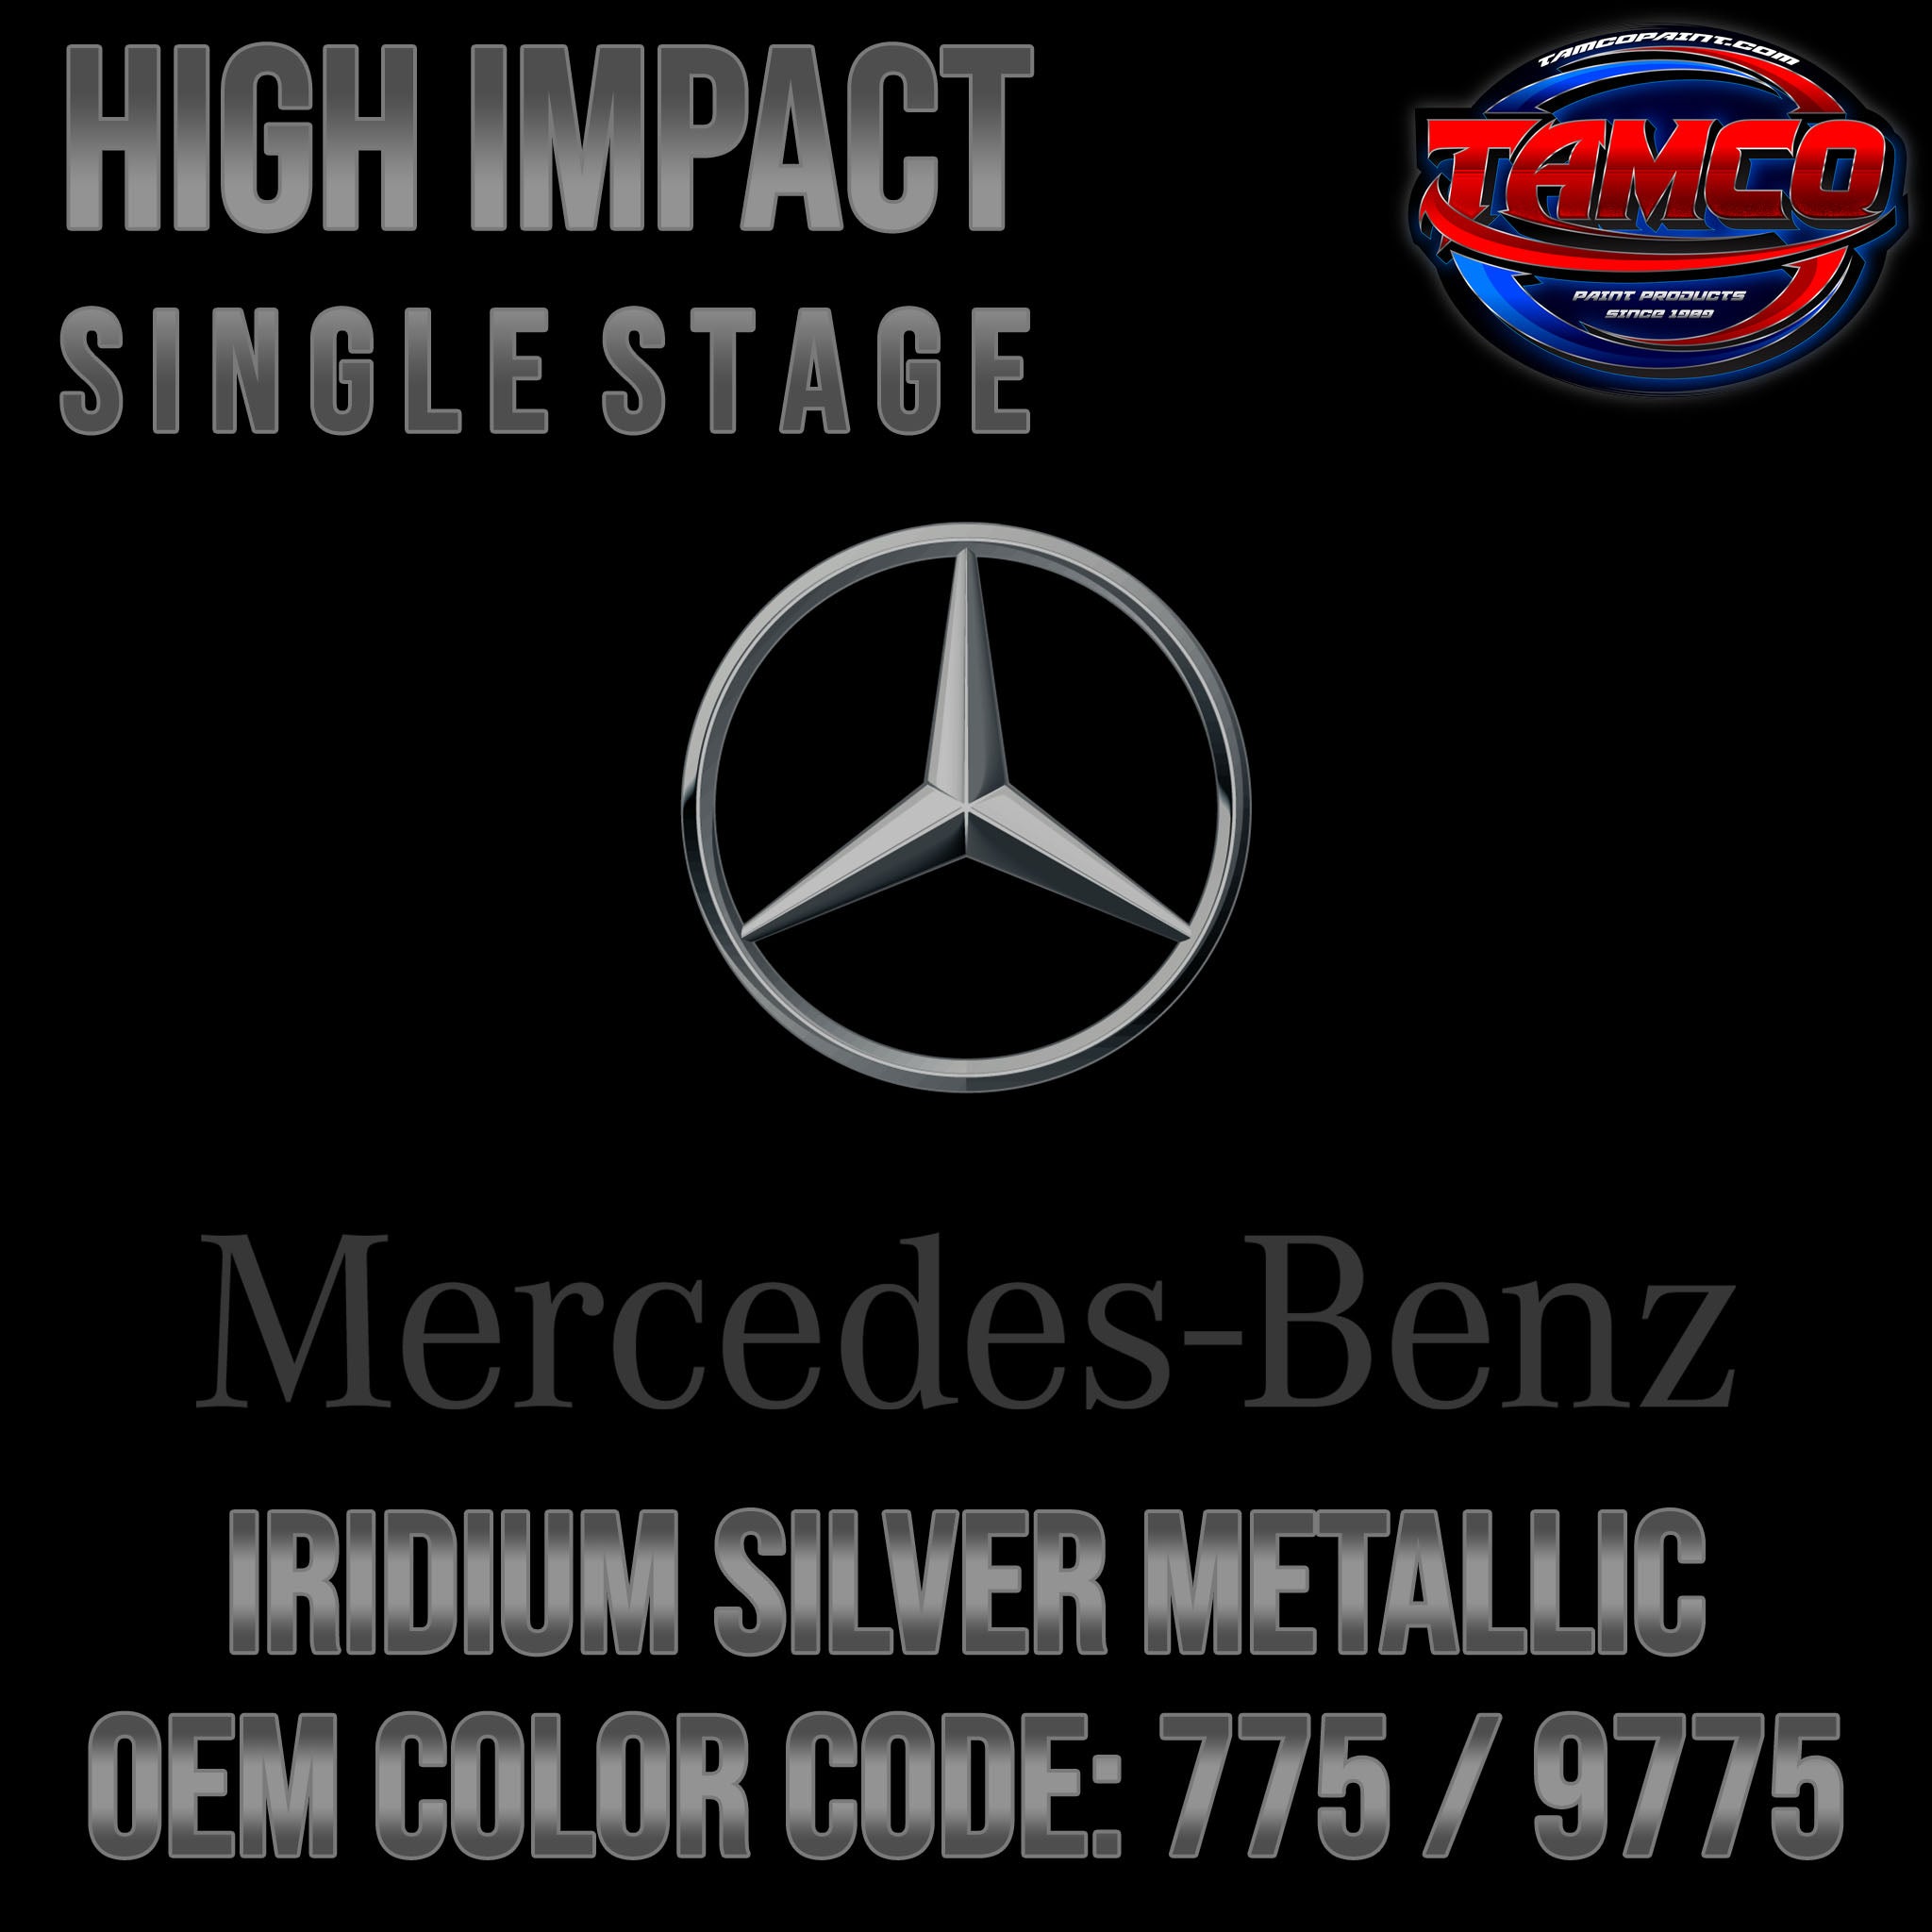 Mercedes Iridium Silver Metallic         OEM High Impact Single  Stage